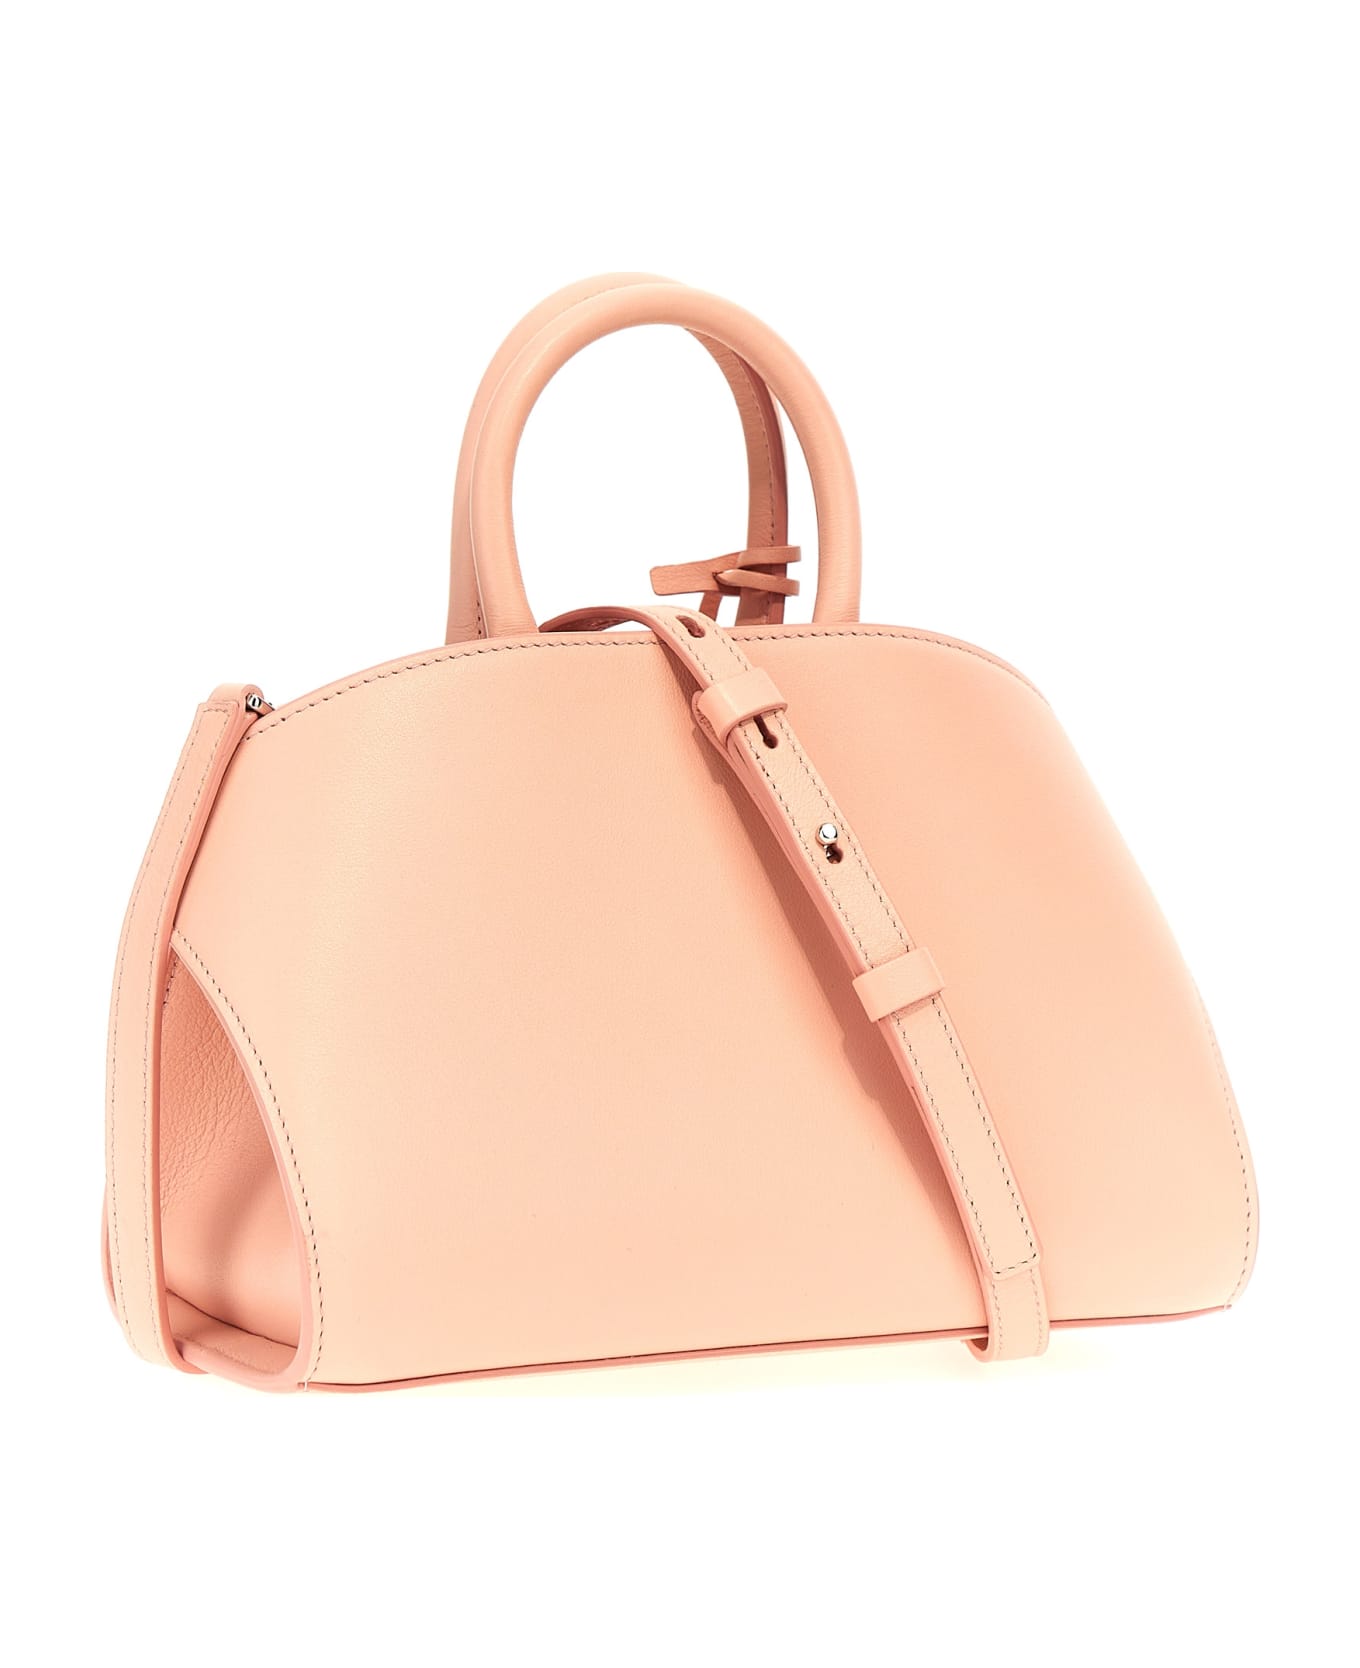 Ferragamo 'hug Mini' Handbag - Pink トートバッグ